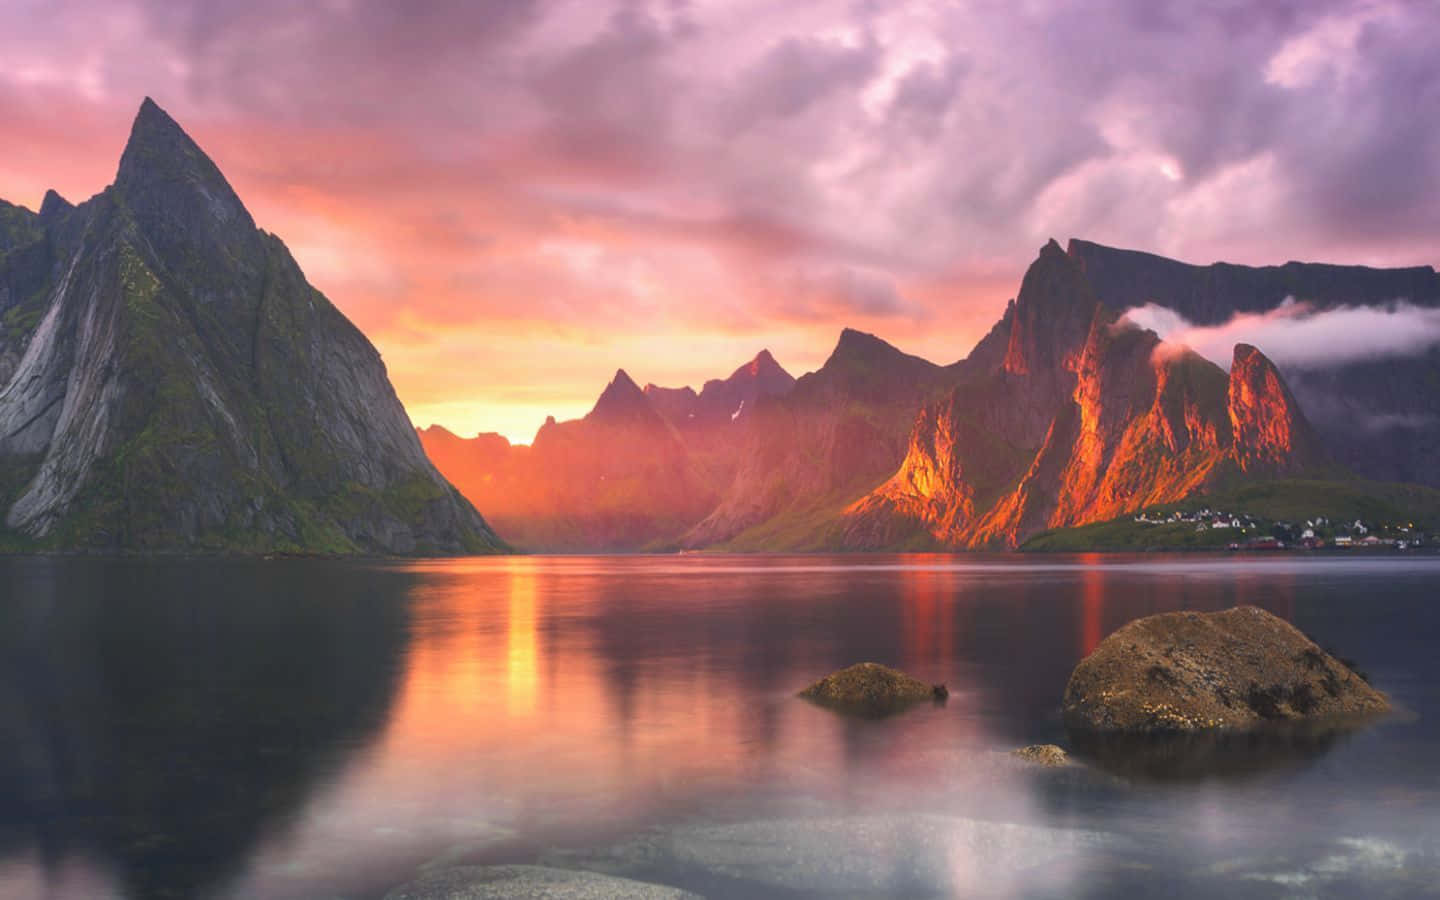 Breathtaking Mountain Landscape at Sunset Wallpaper